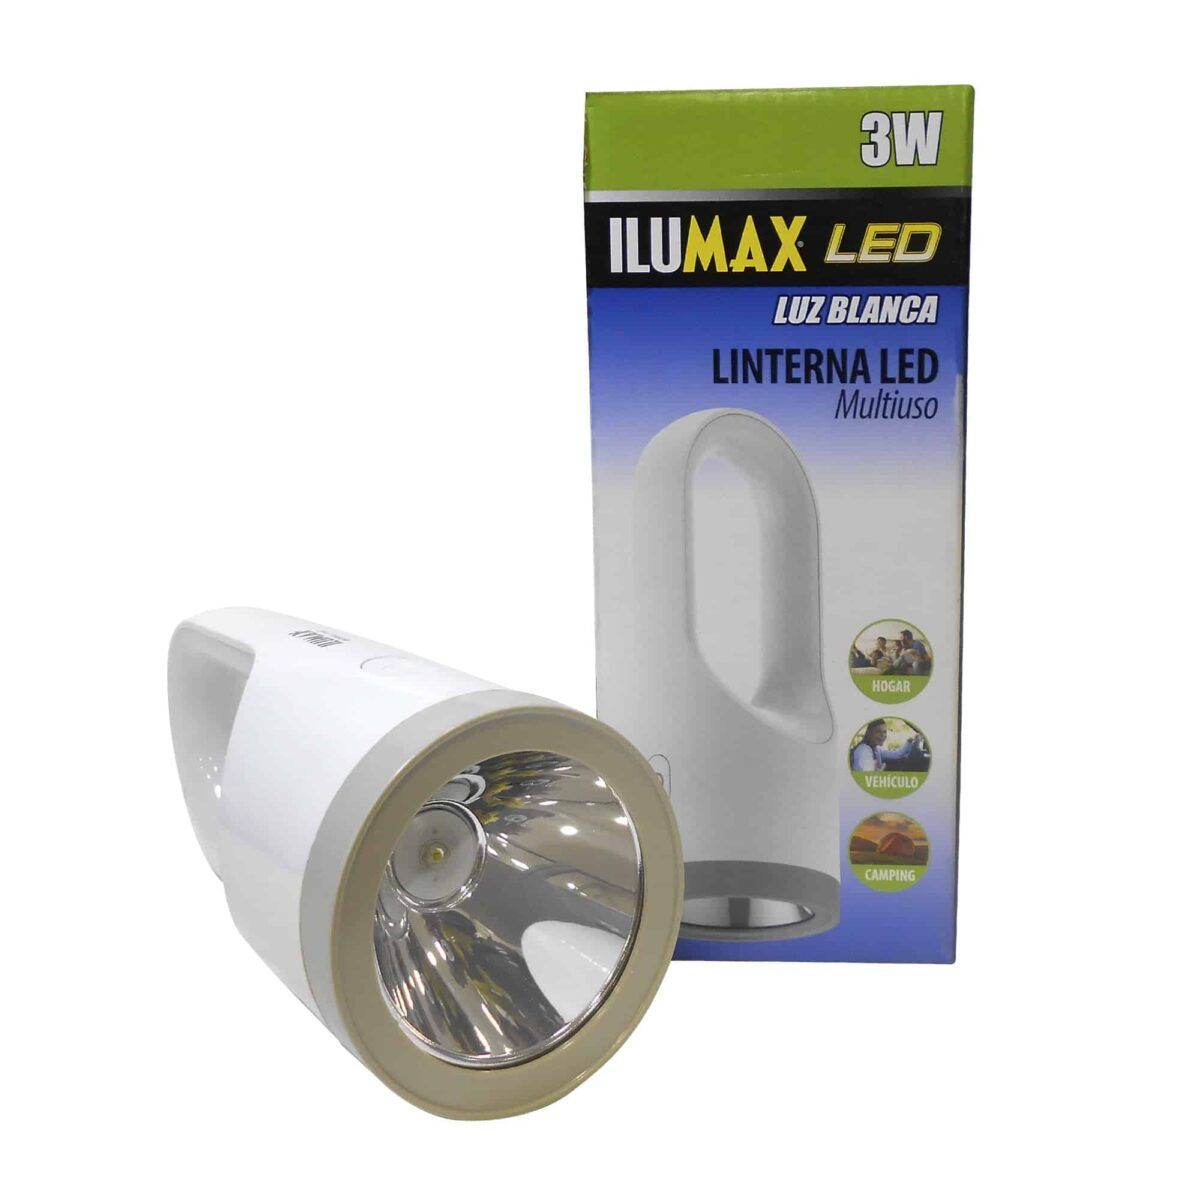 Linterna LED 3W Recargable Multiuso Luz Blanca 1442 1